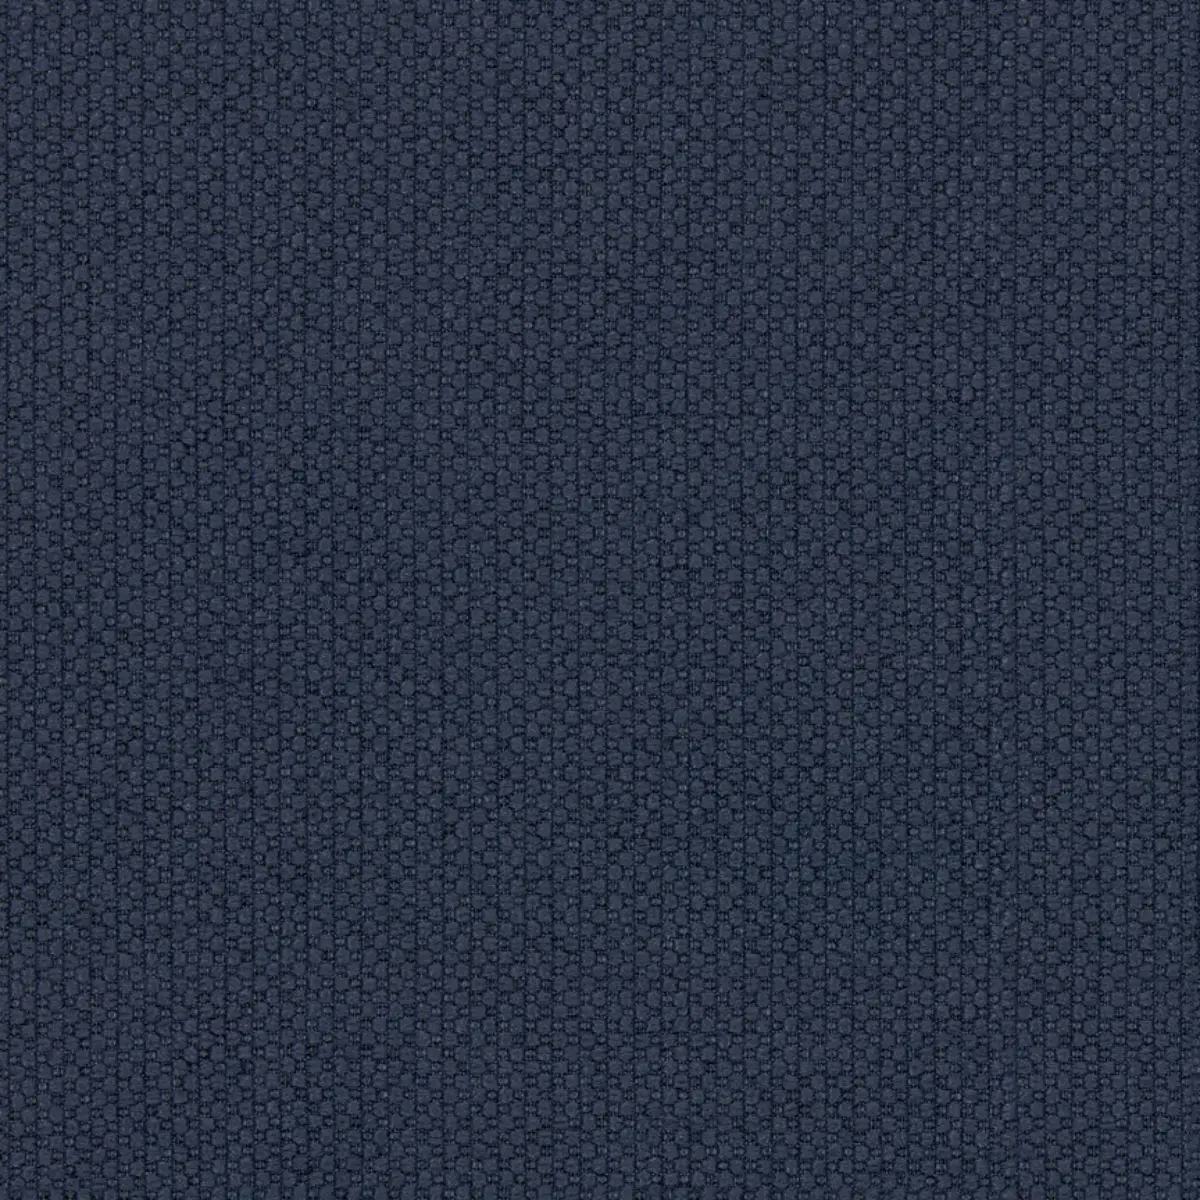 Fabric sample Merit 0005 blue